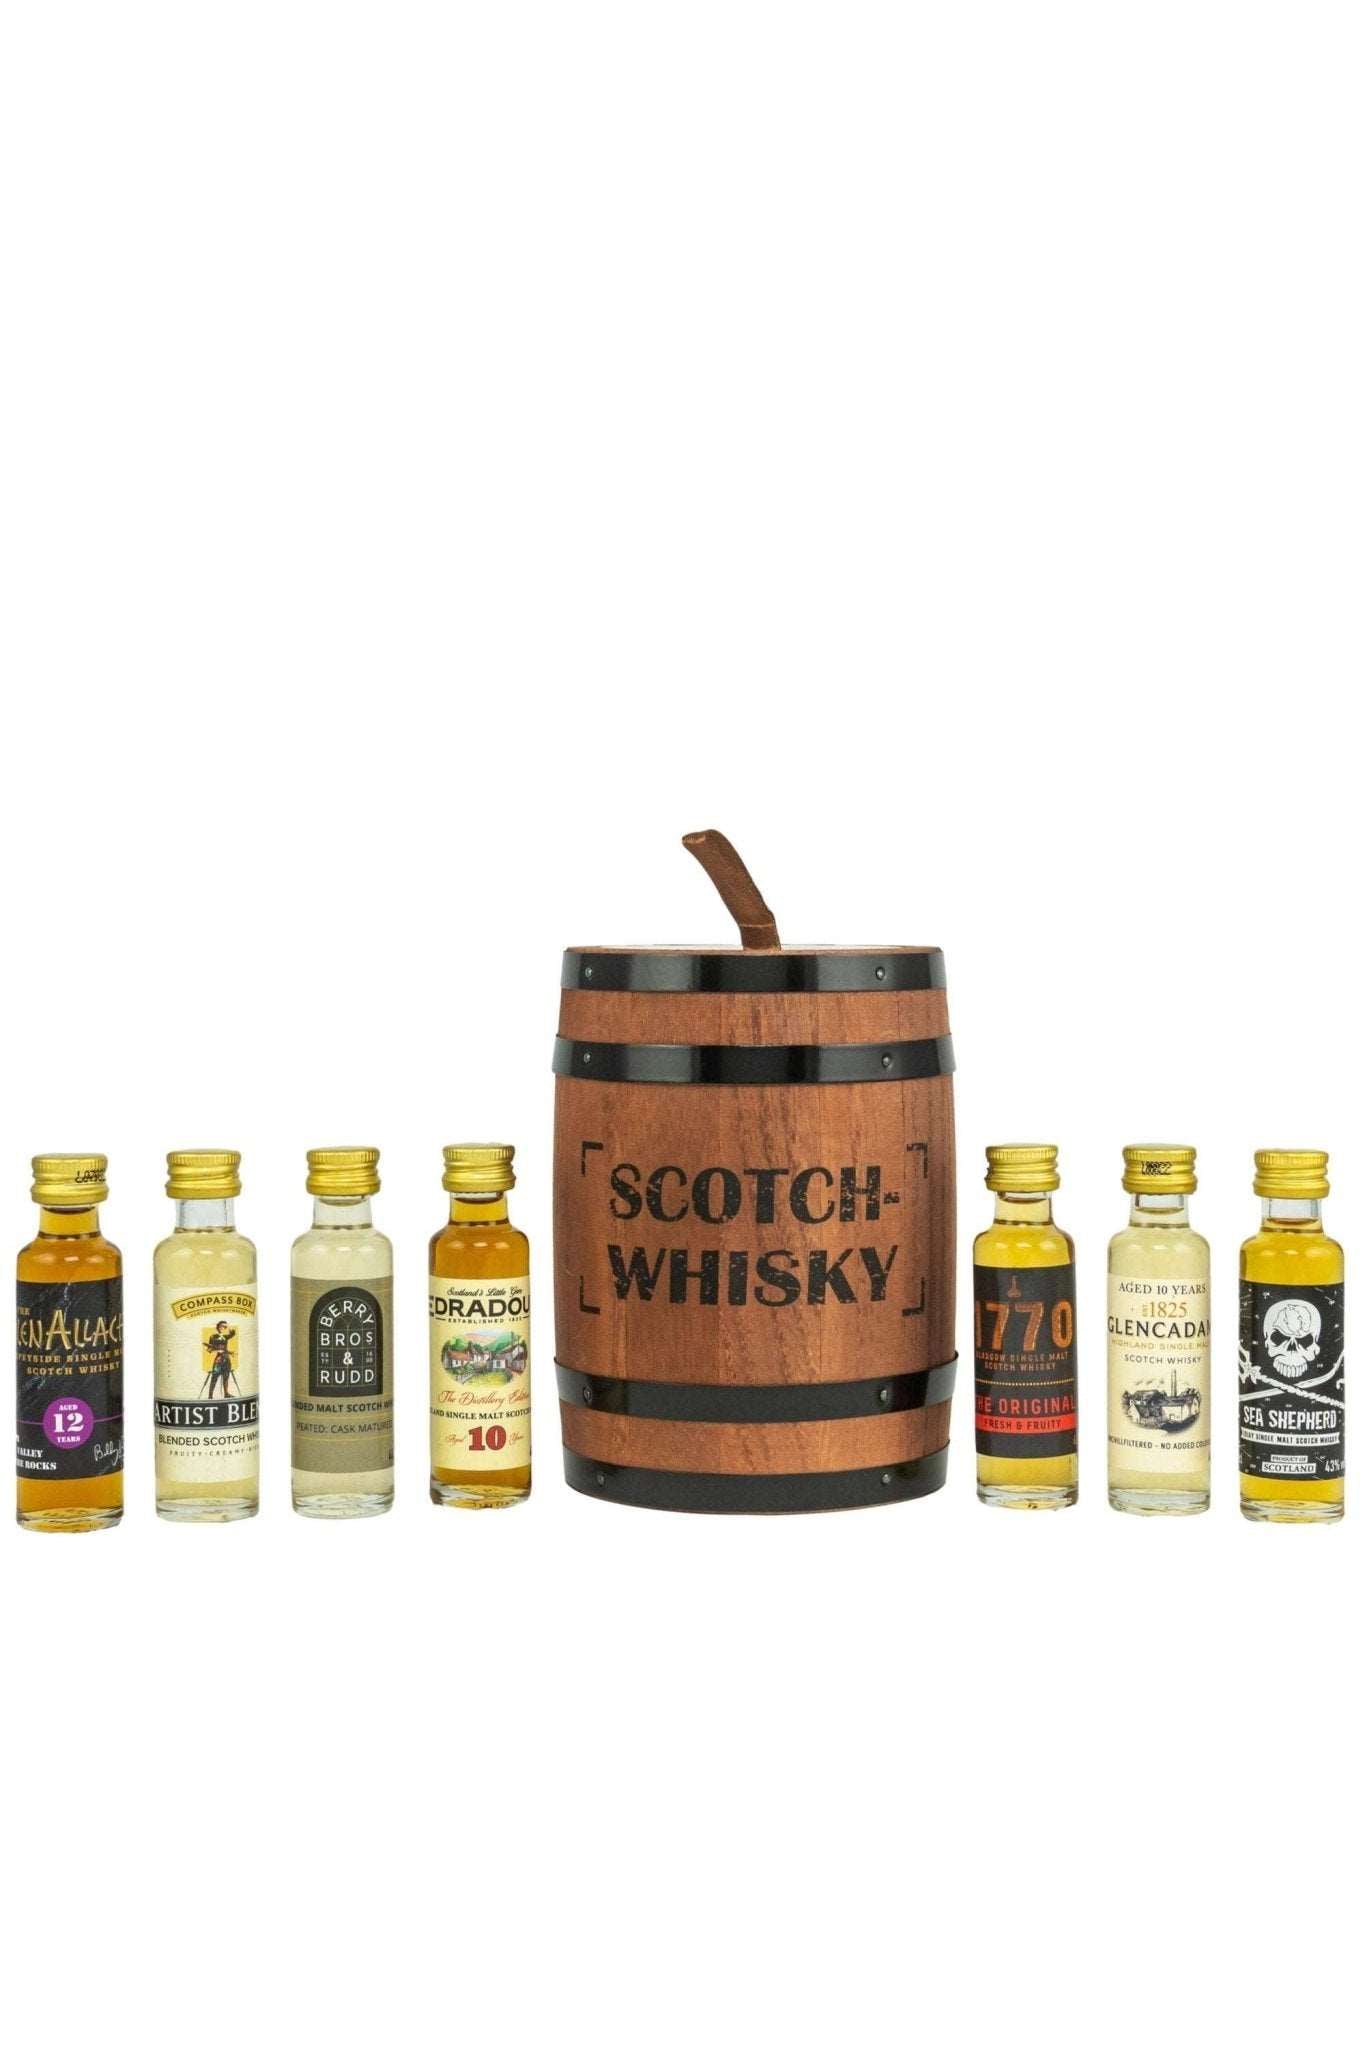 Scotch Whisky Tasting Fass Kirsch Import Taste24 7x20ml - Maltimore